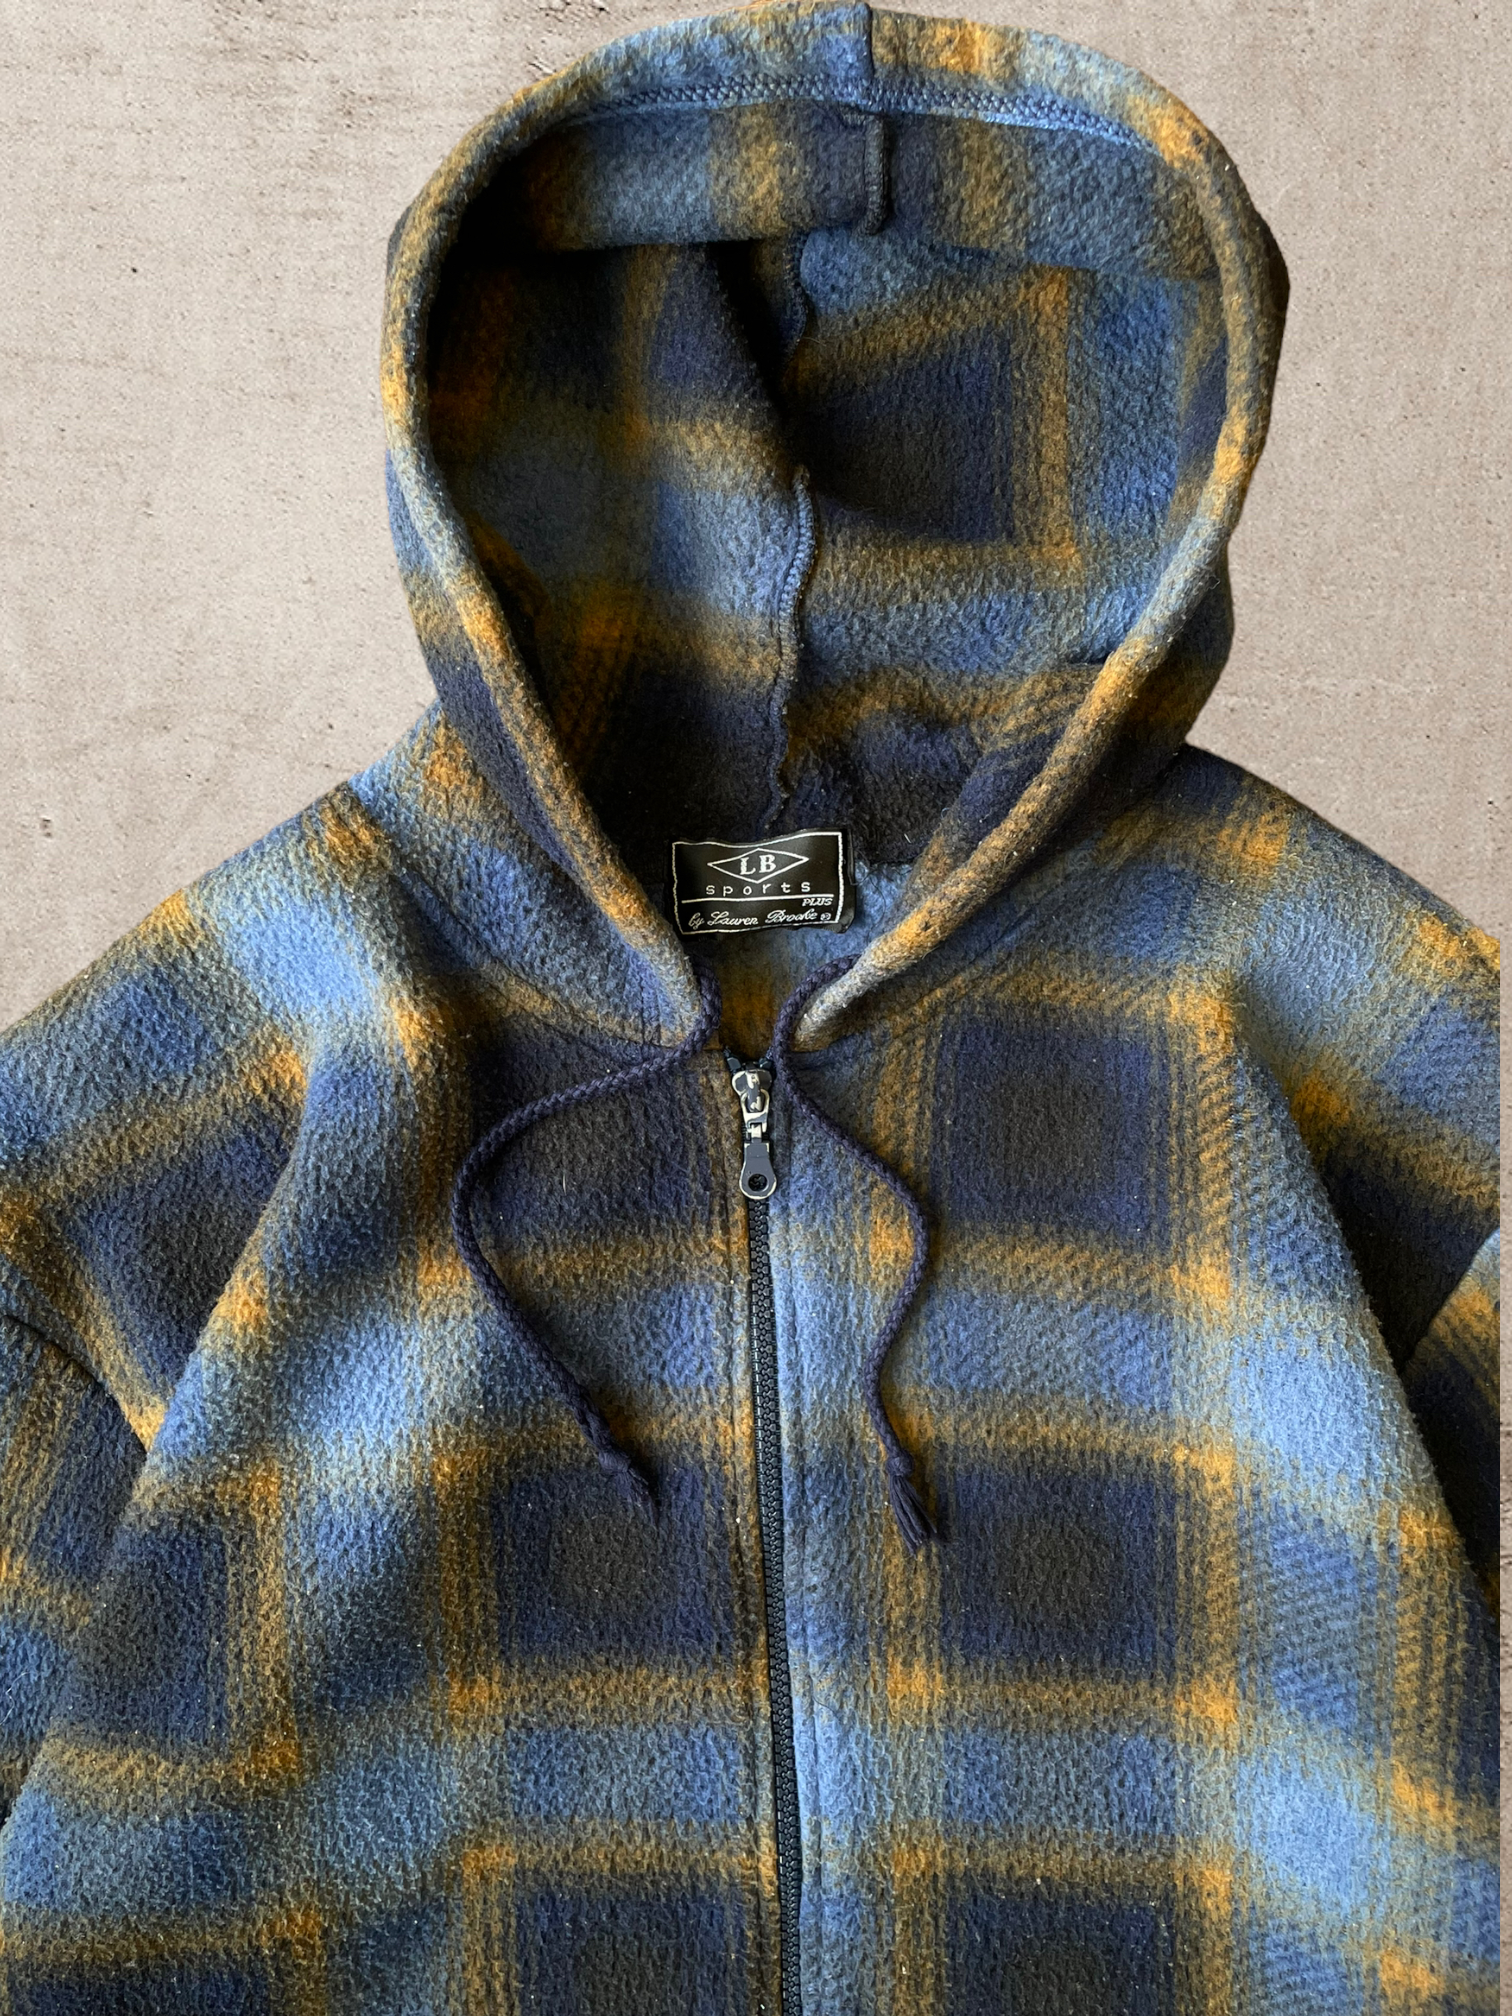 90s Plaid Fleece Zip up Sweatshirt - Large